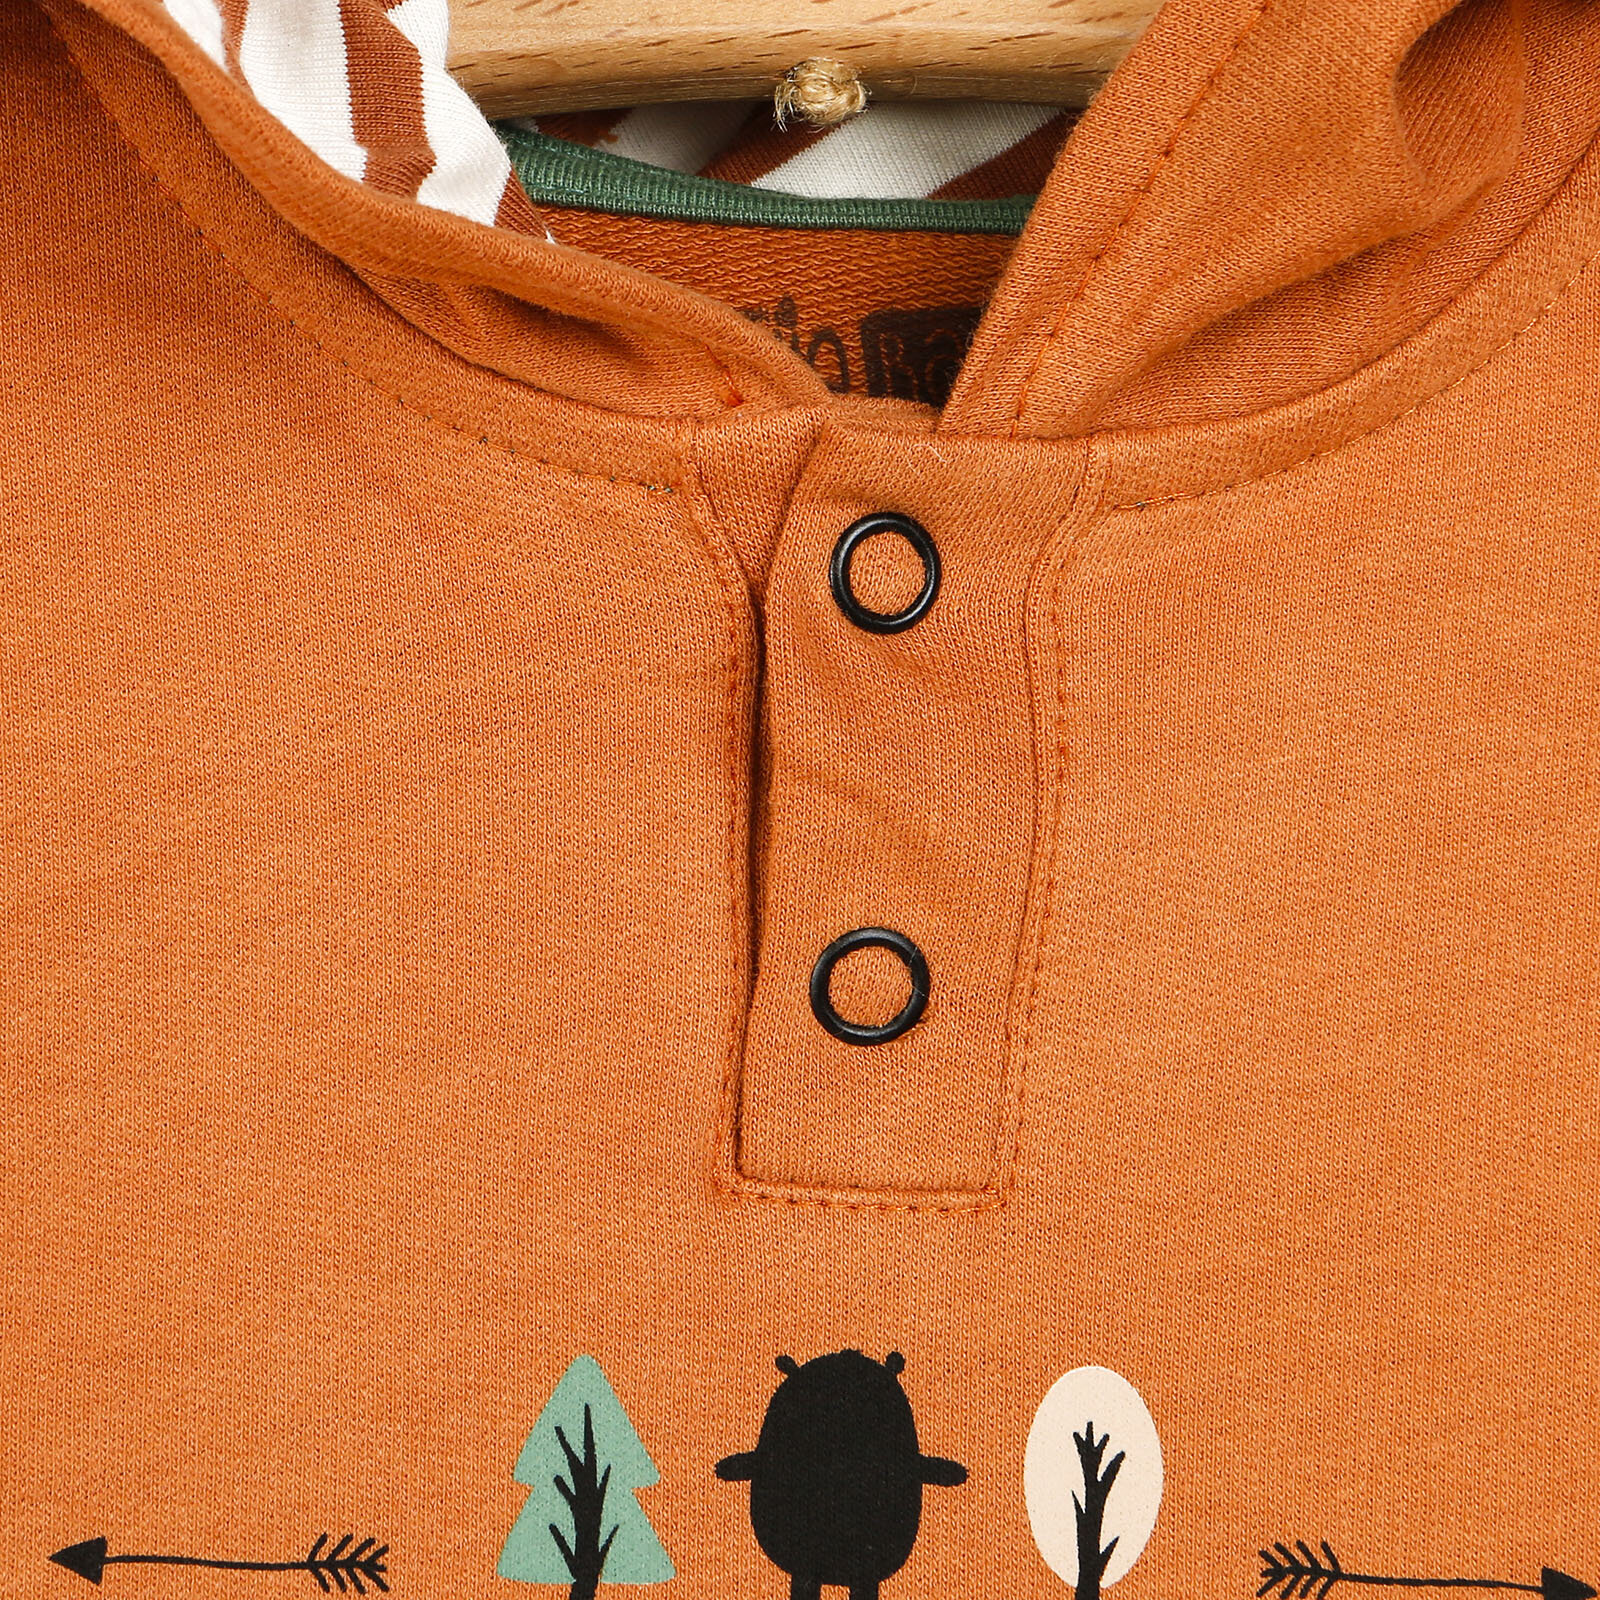 Happy Camper Erkek Bebek Kapüşonlu Sweatshirt-Pantolon